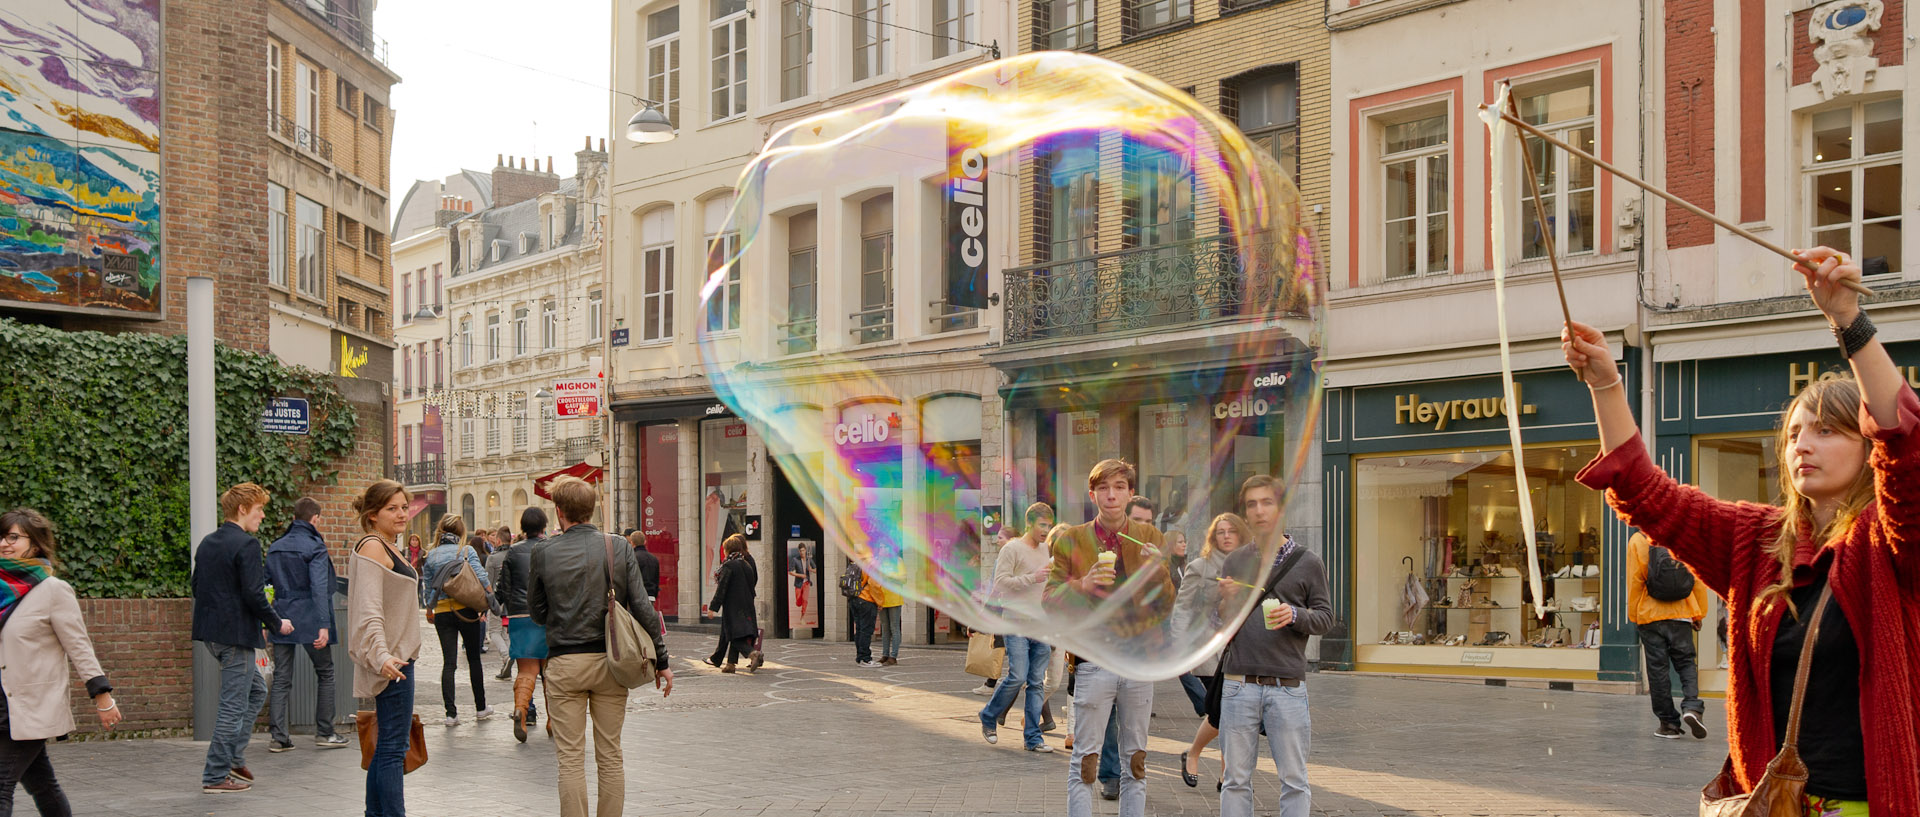 Jeu de bulles de savon, rue de Béthune, à Lille.